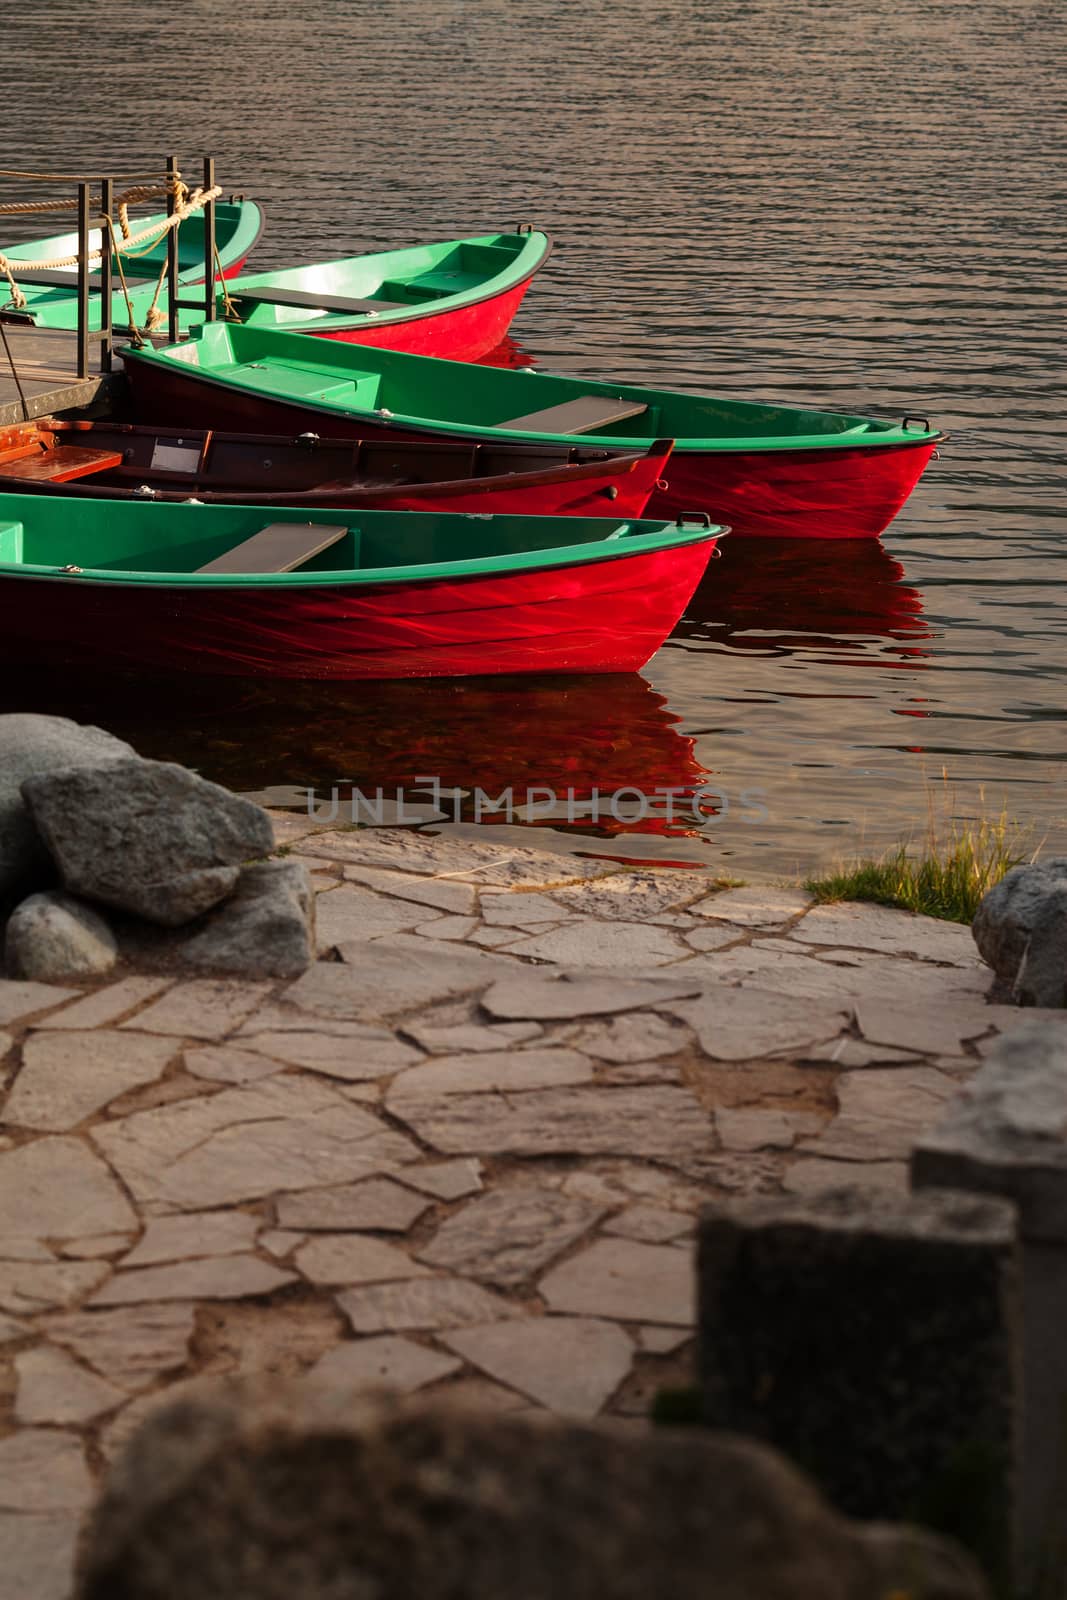 Boat station on the lake by igor_stramyk